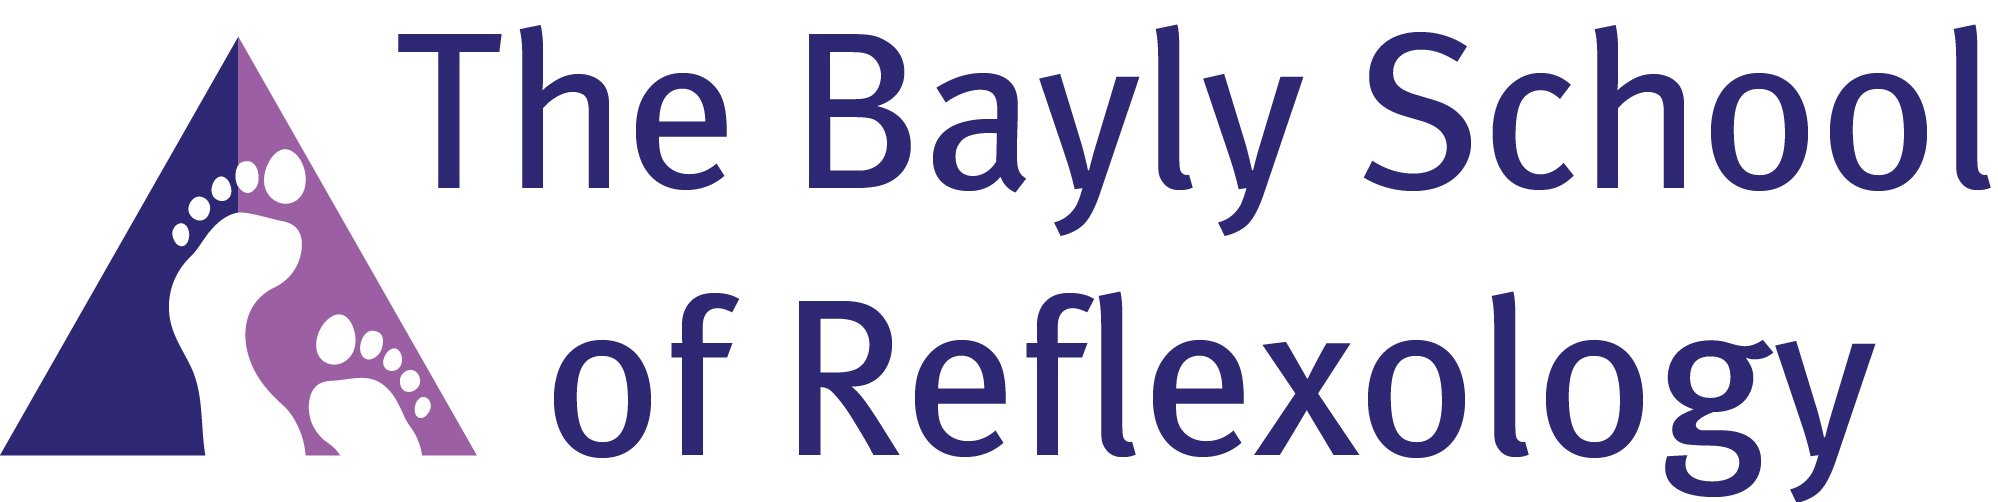 The Bayly School of Reflexology logo